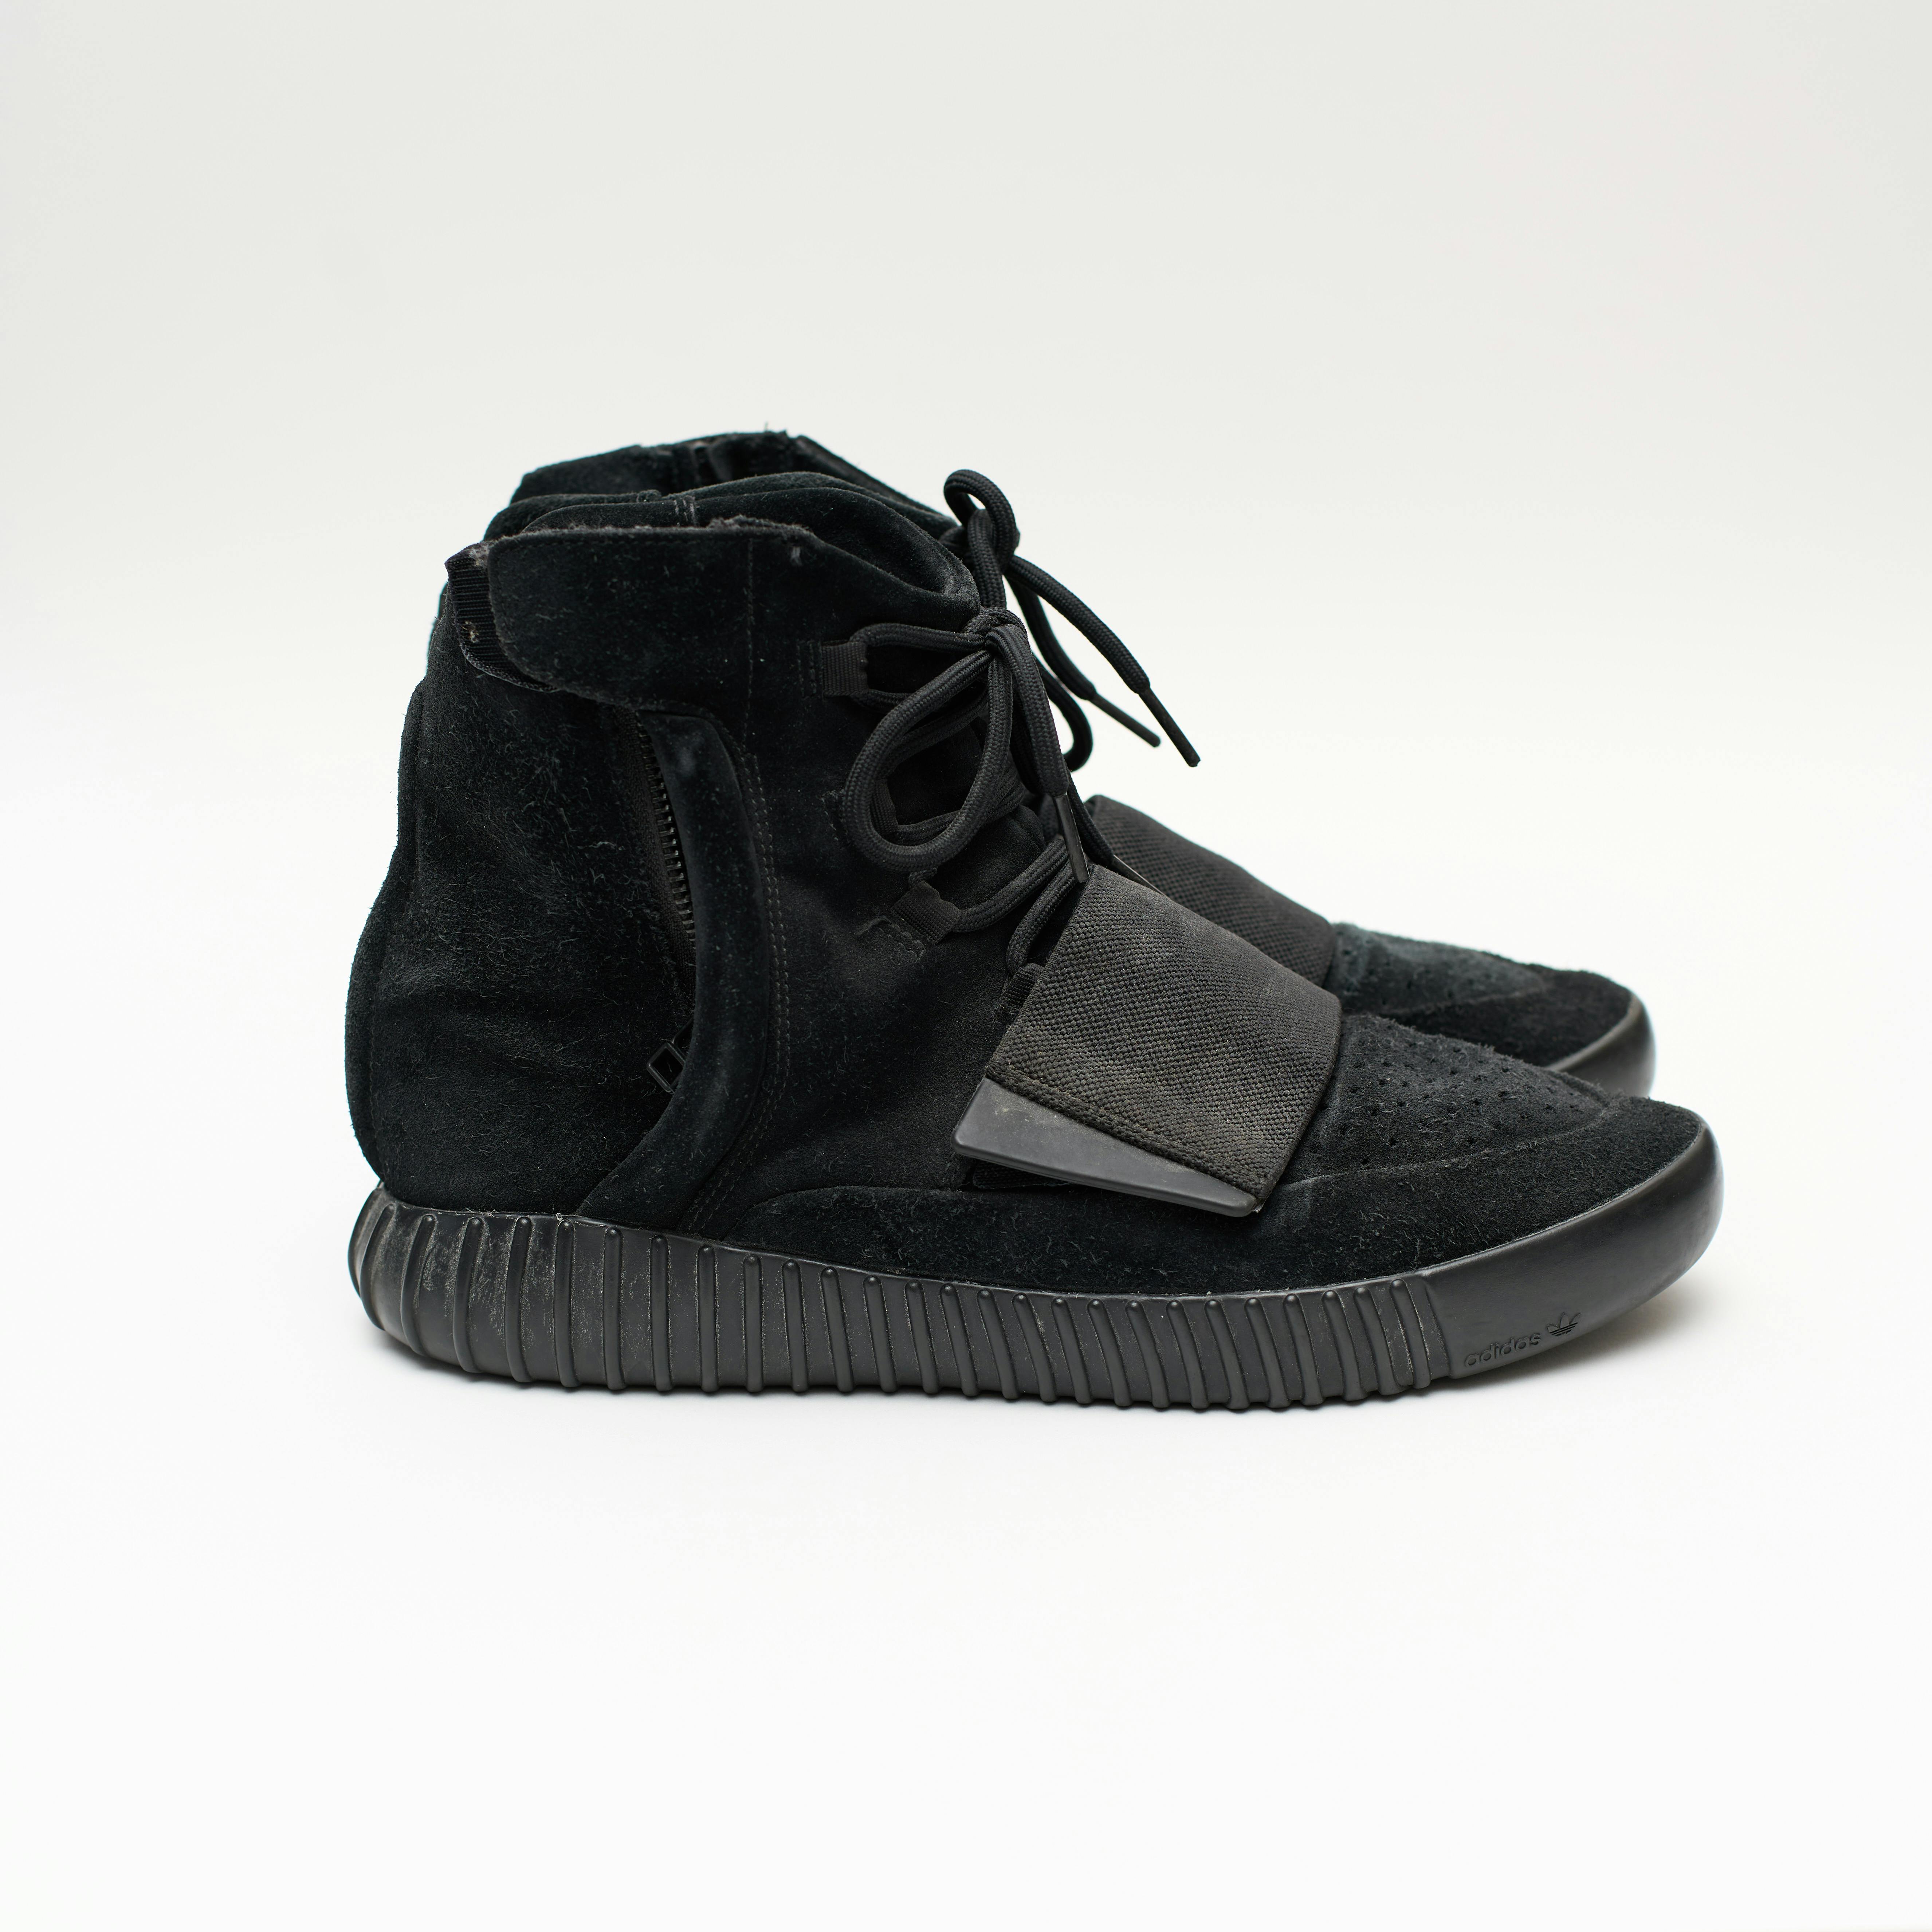 Adidas Yeezy Boost 750 Triple Black Size 10 - 2